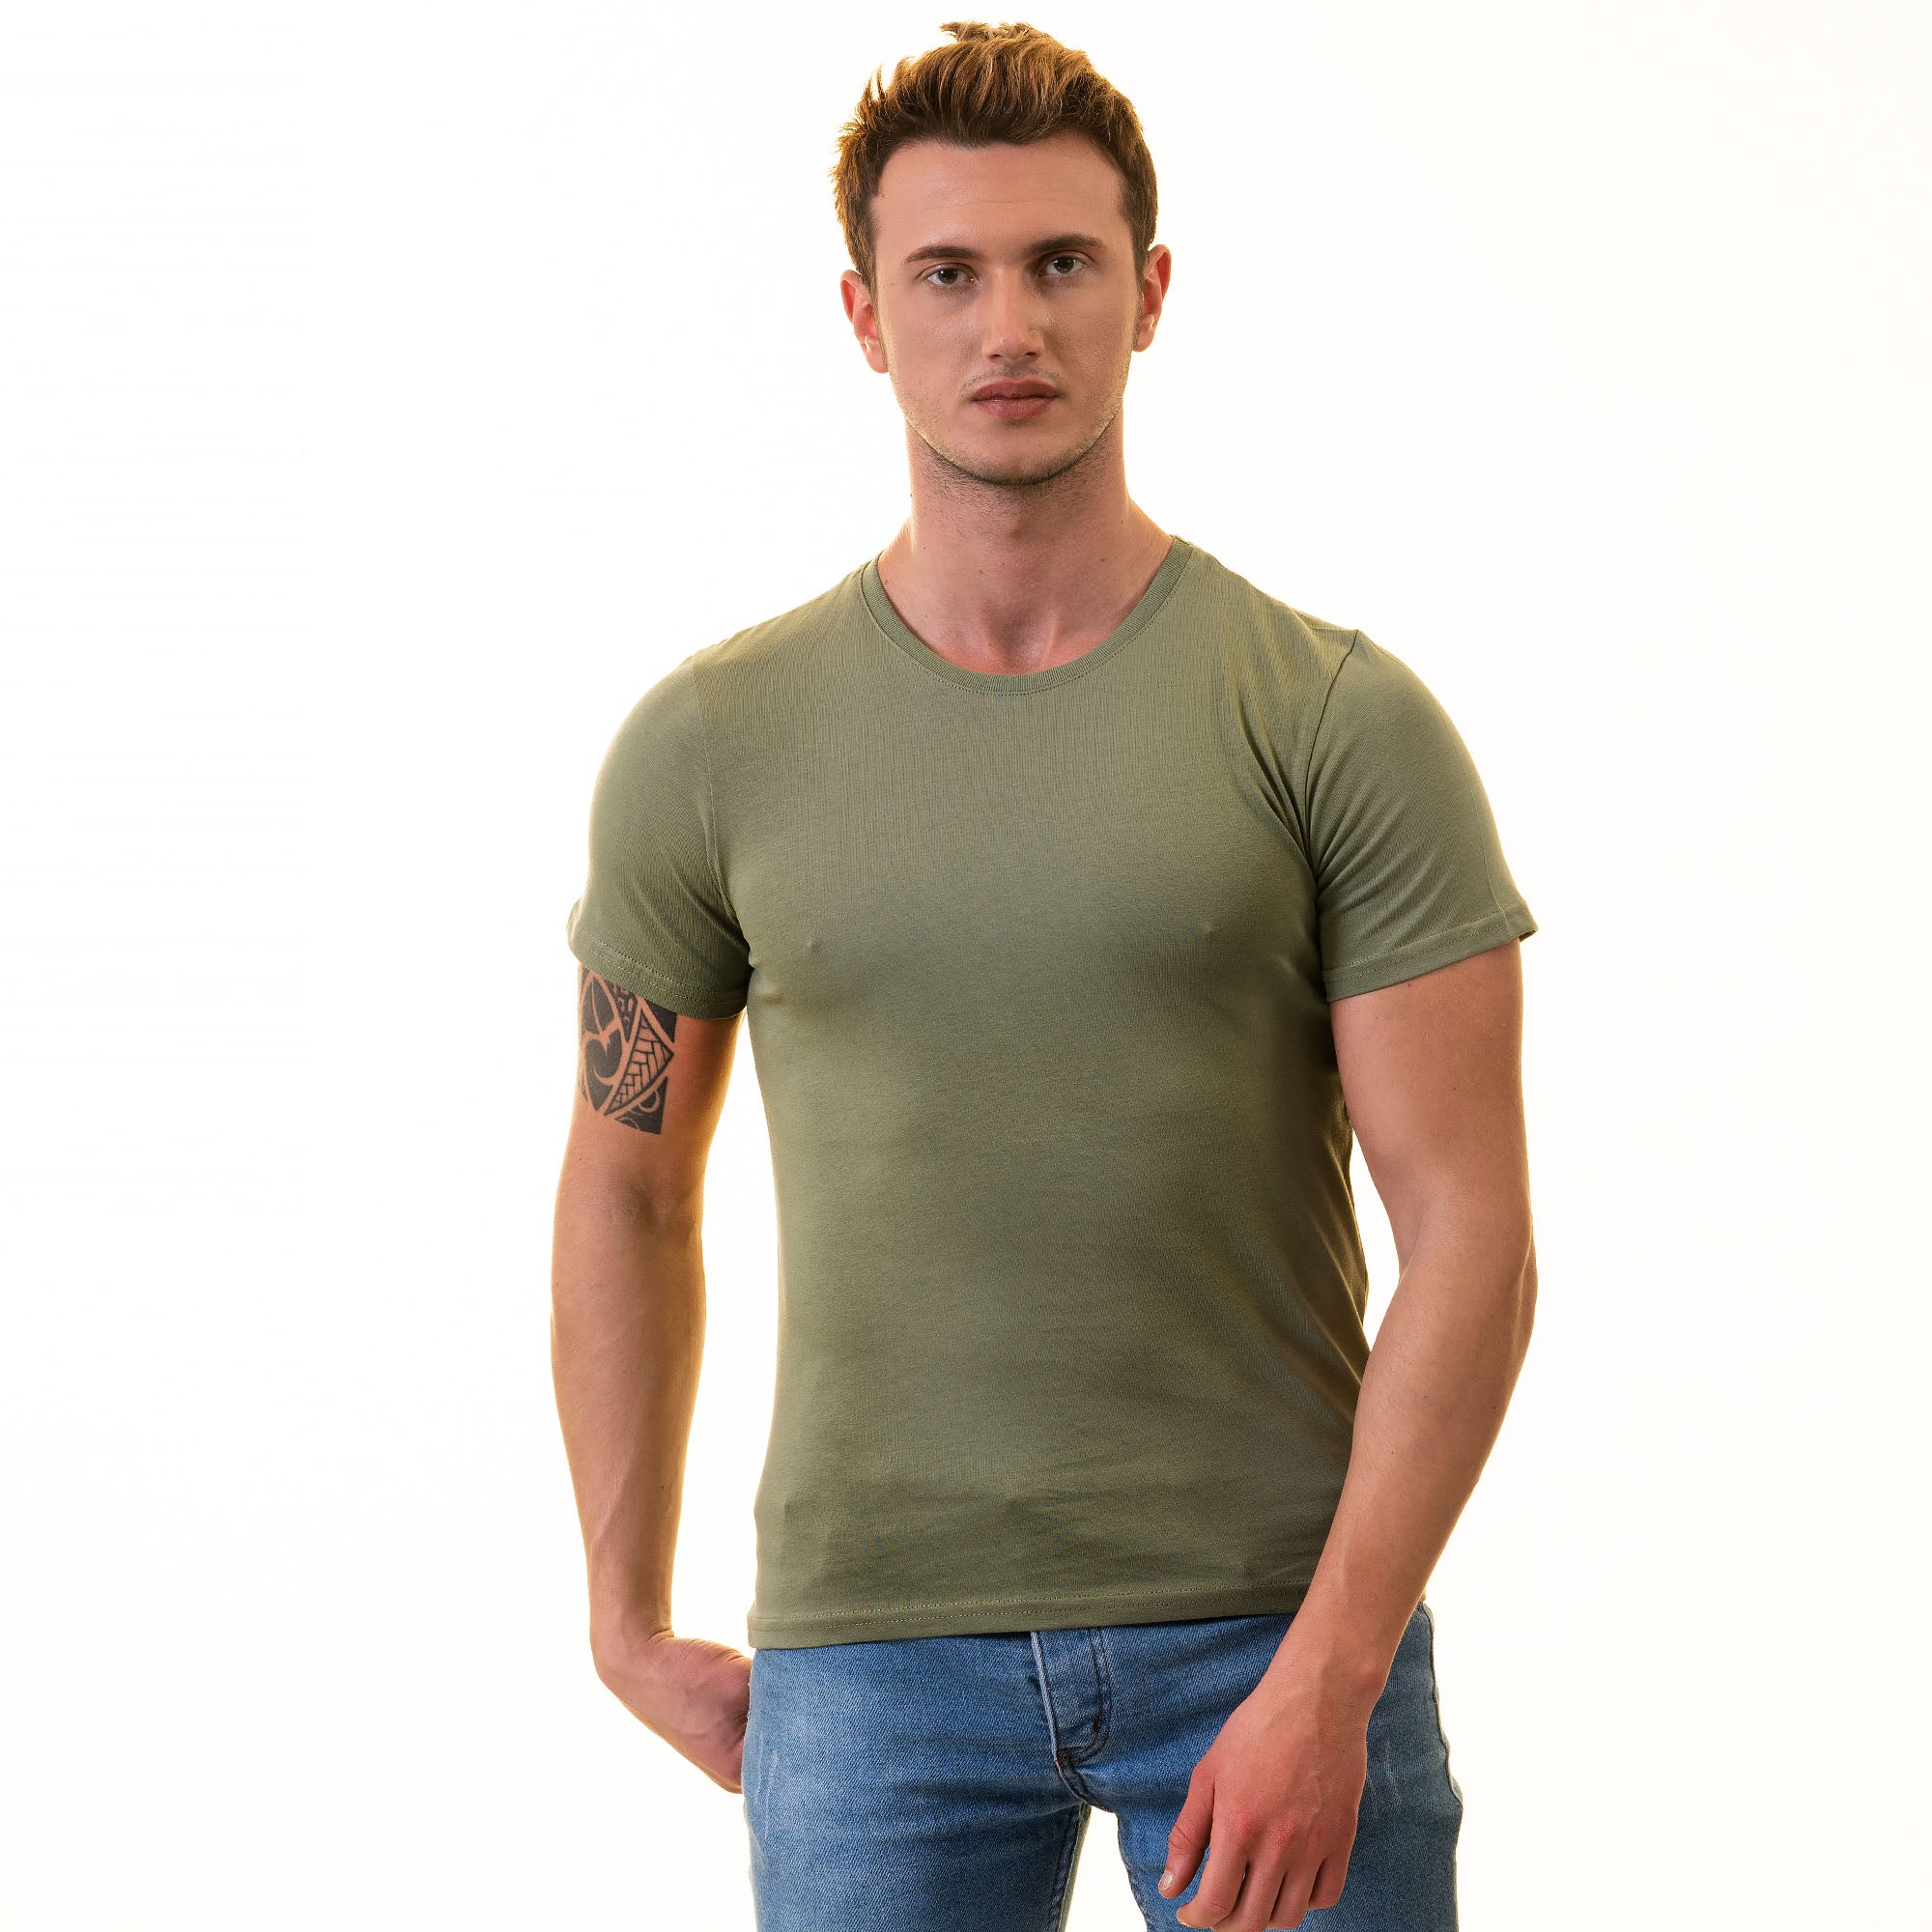 Khaki European Made & Designed Premium Quality T-Shirt - Crew Neck Short Sleeve T-Shirts